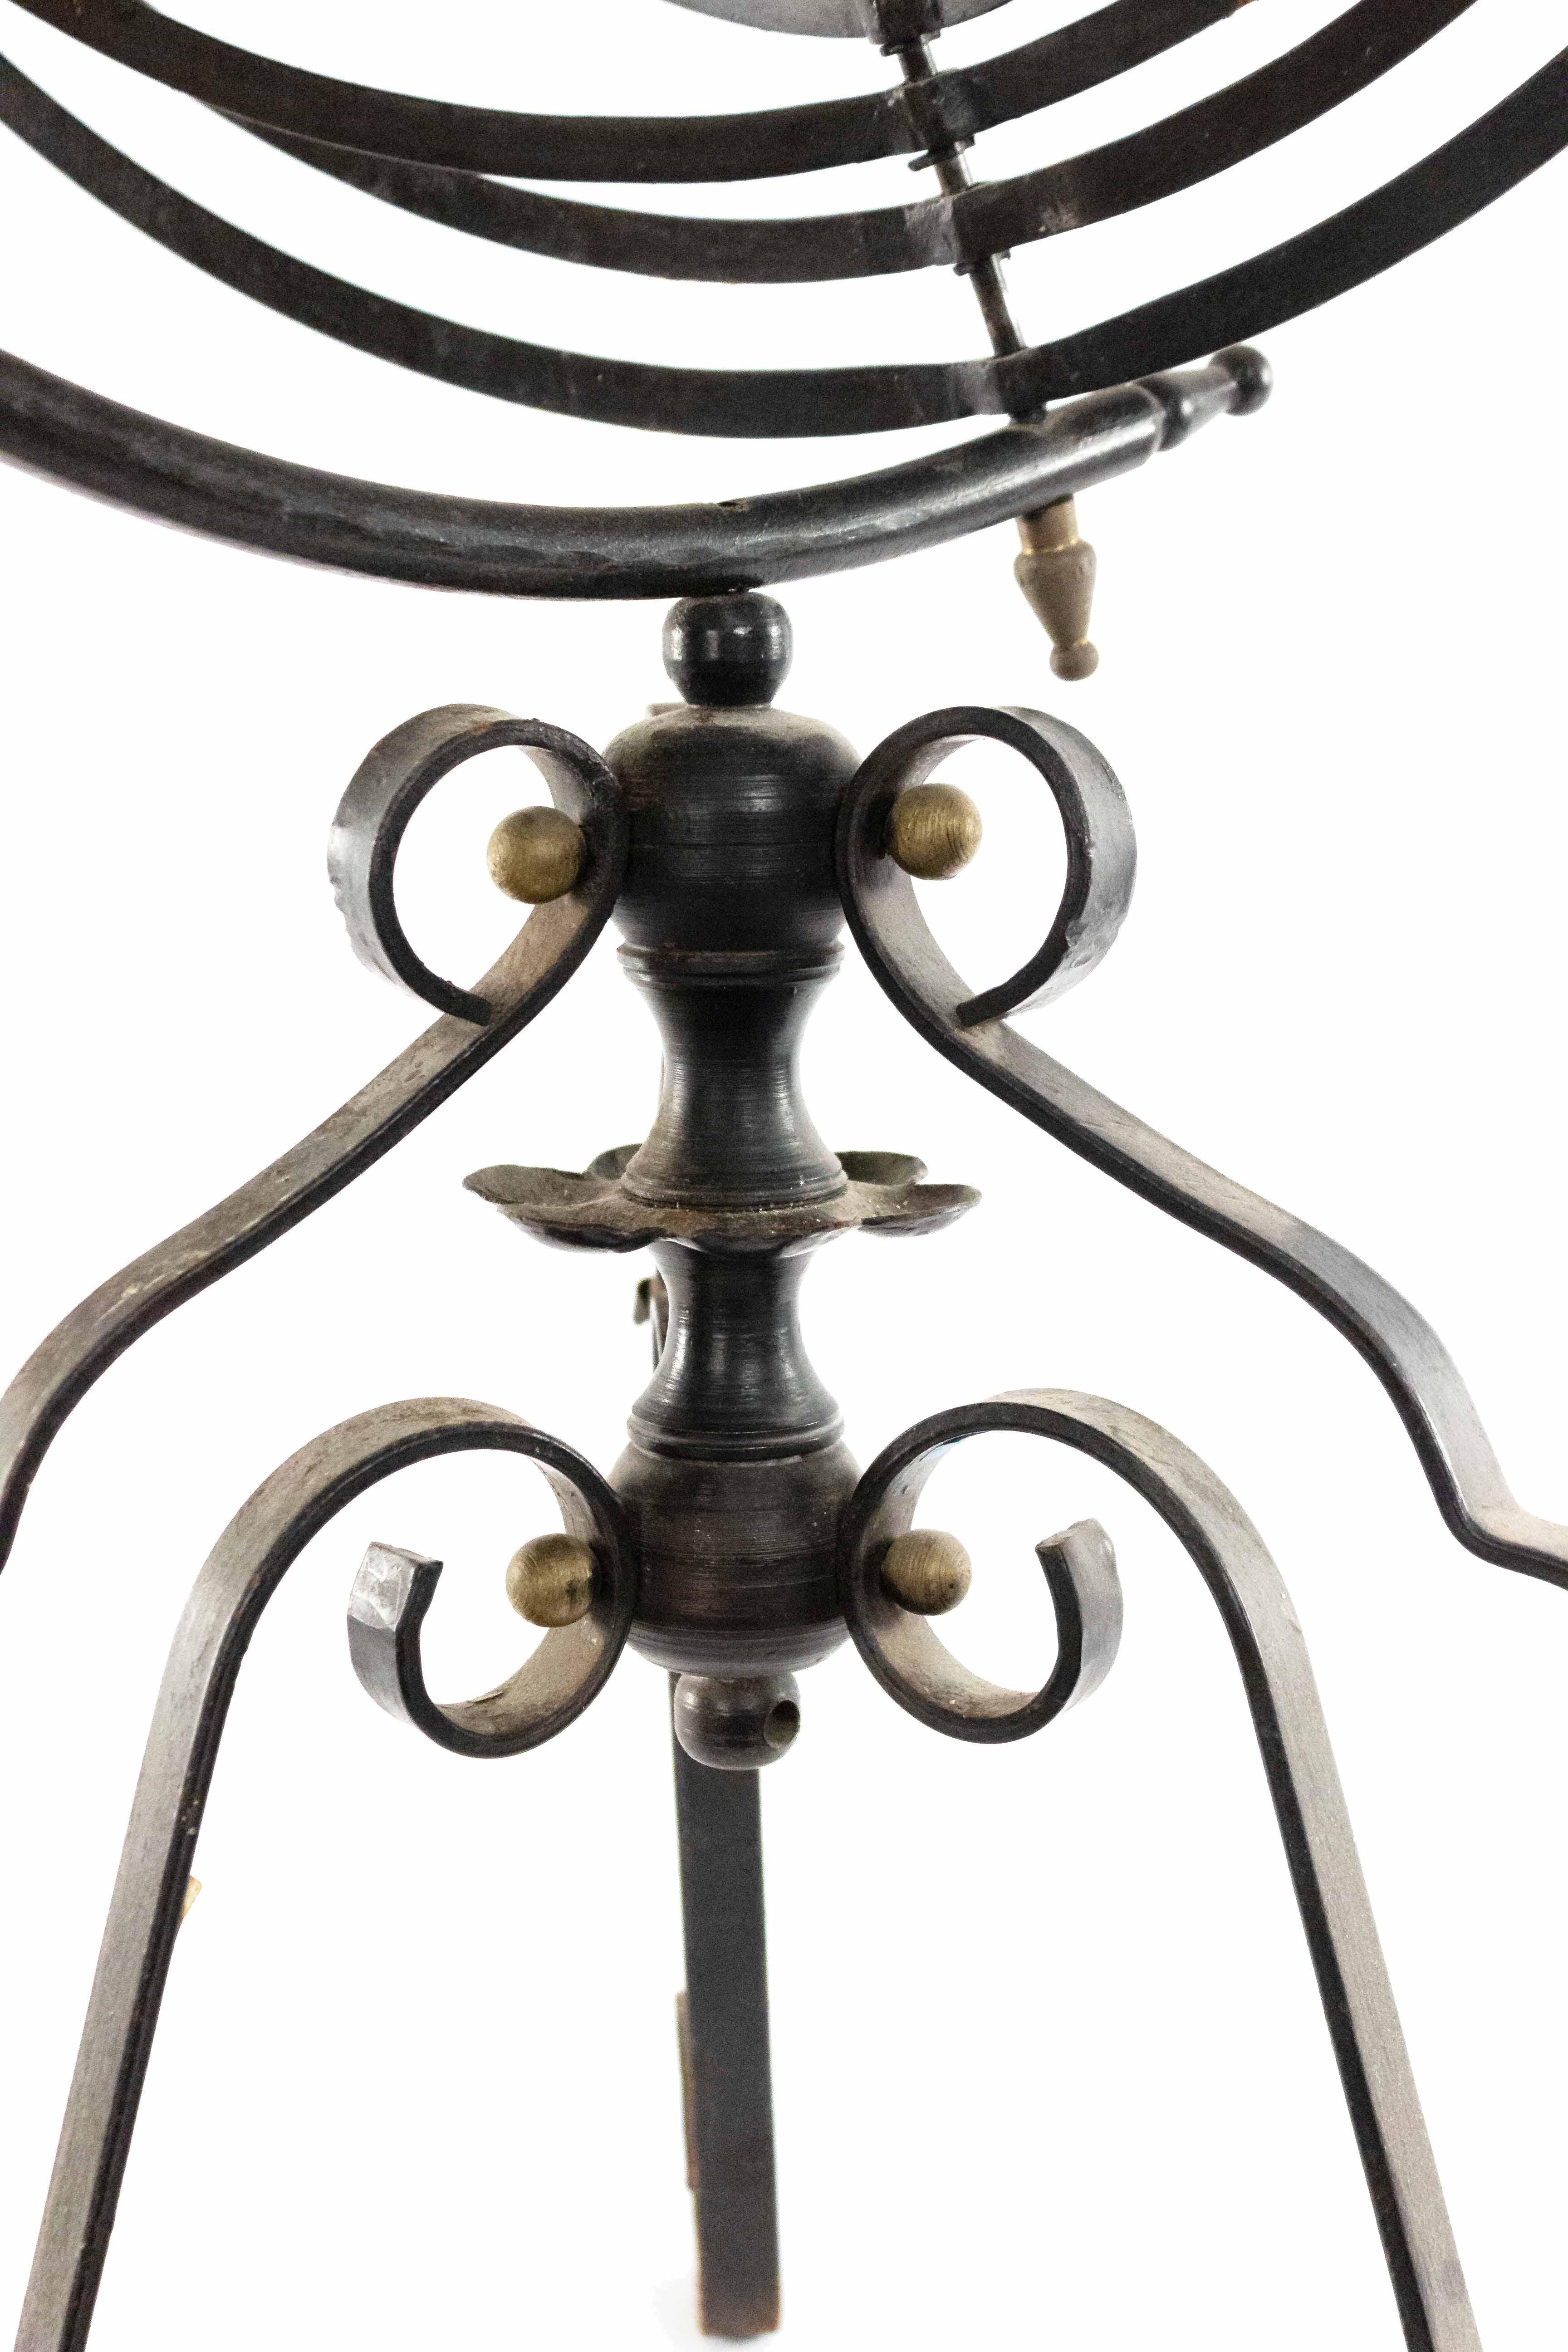 Italian Renaissance style wrought iron floor standing armillary globe supported on a 3 scroll leg base.
 